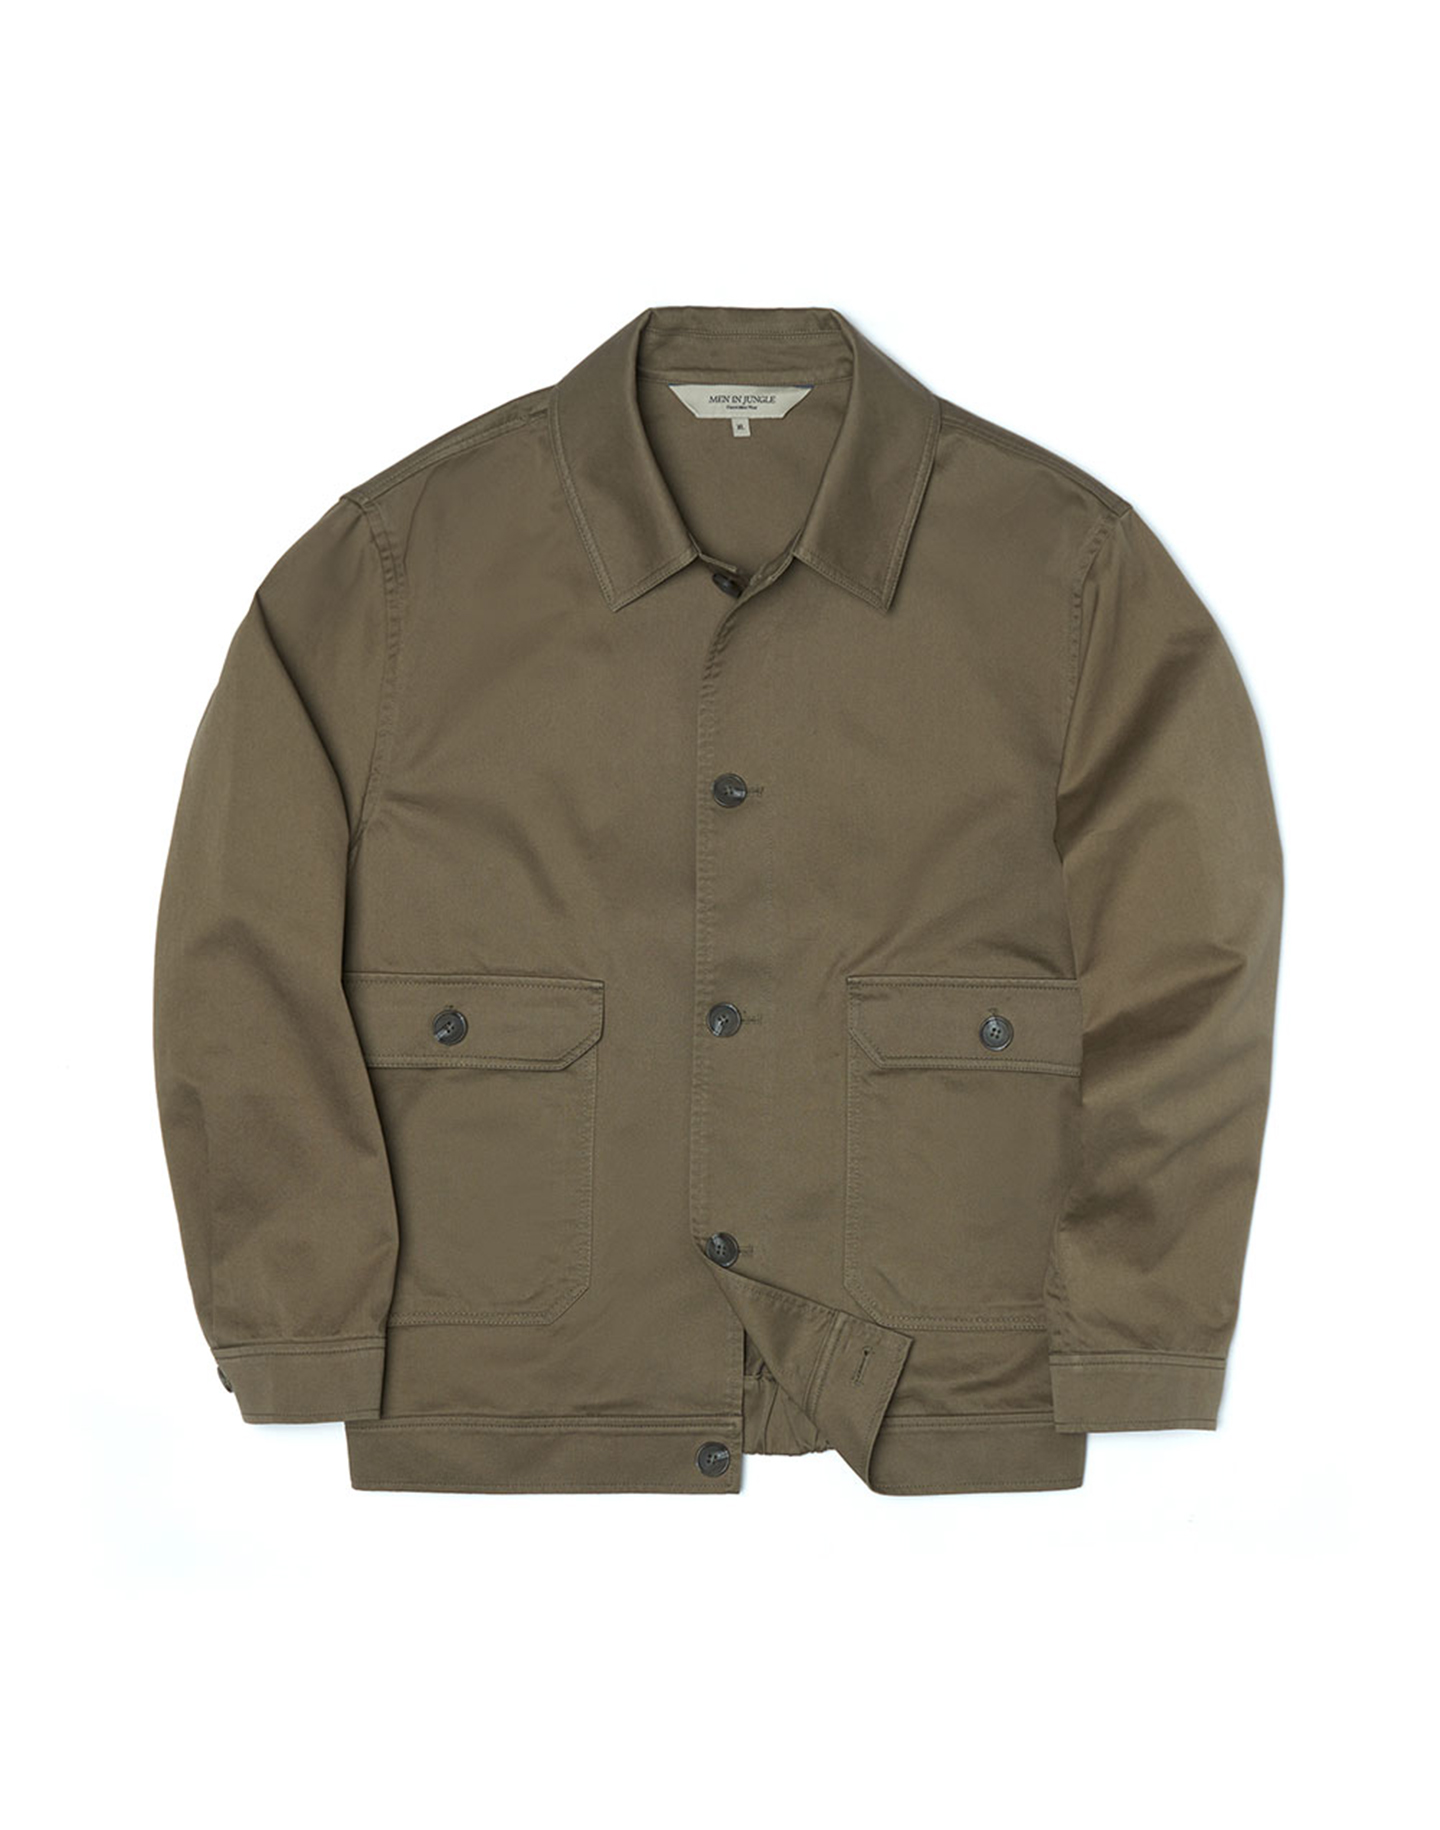 [MIJ] BX Cotton A-1 Jacket - Army Green